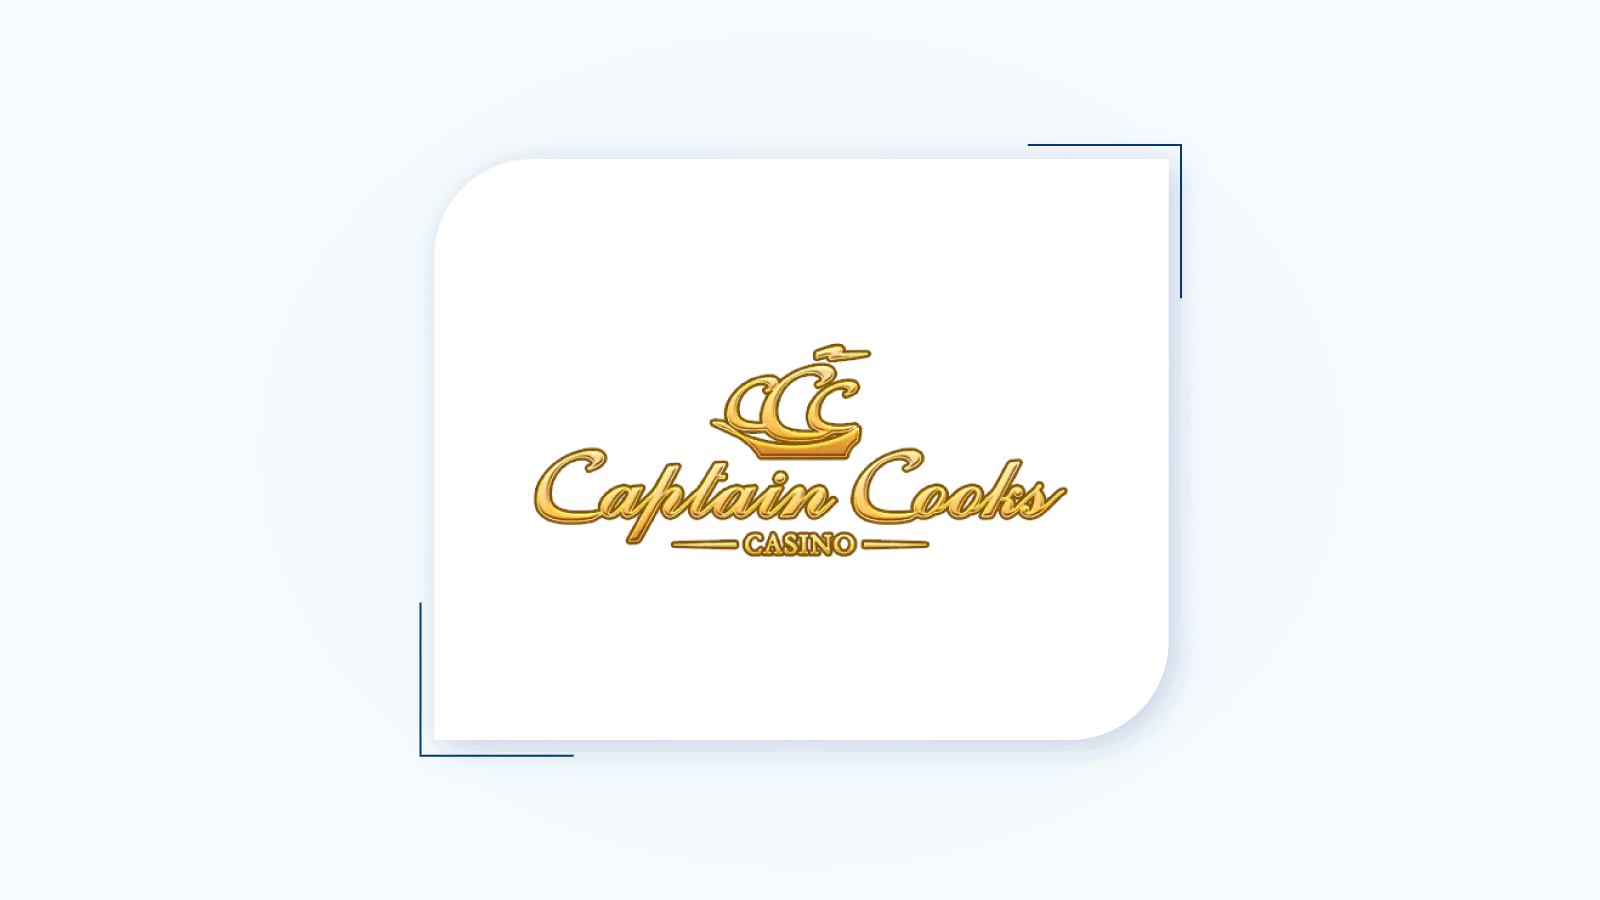 Captain Cooks Casino - Best Casino Rewards free spins offer